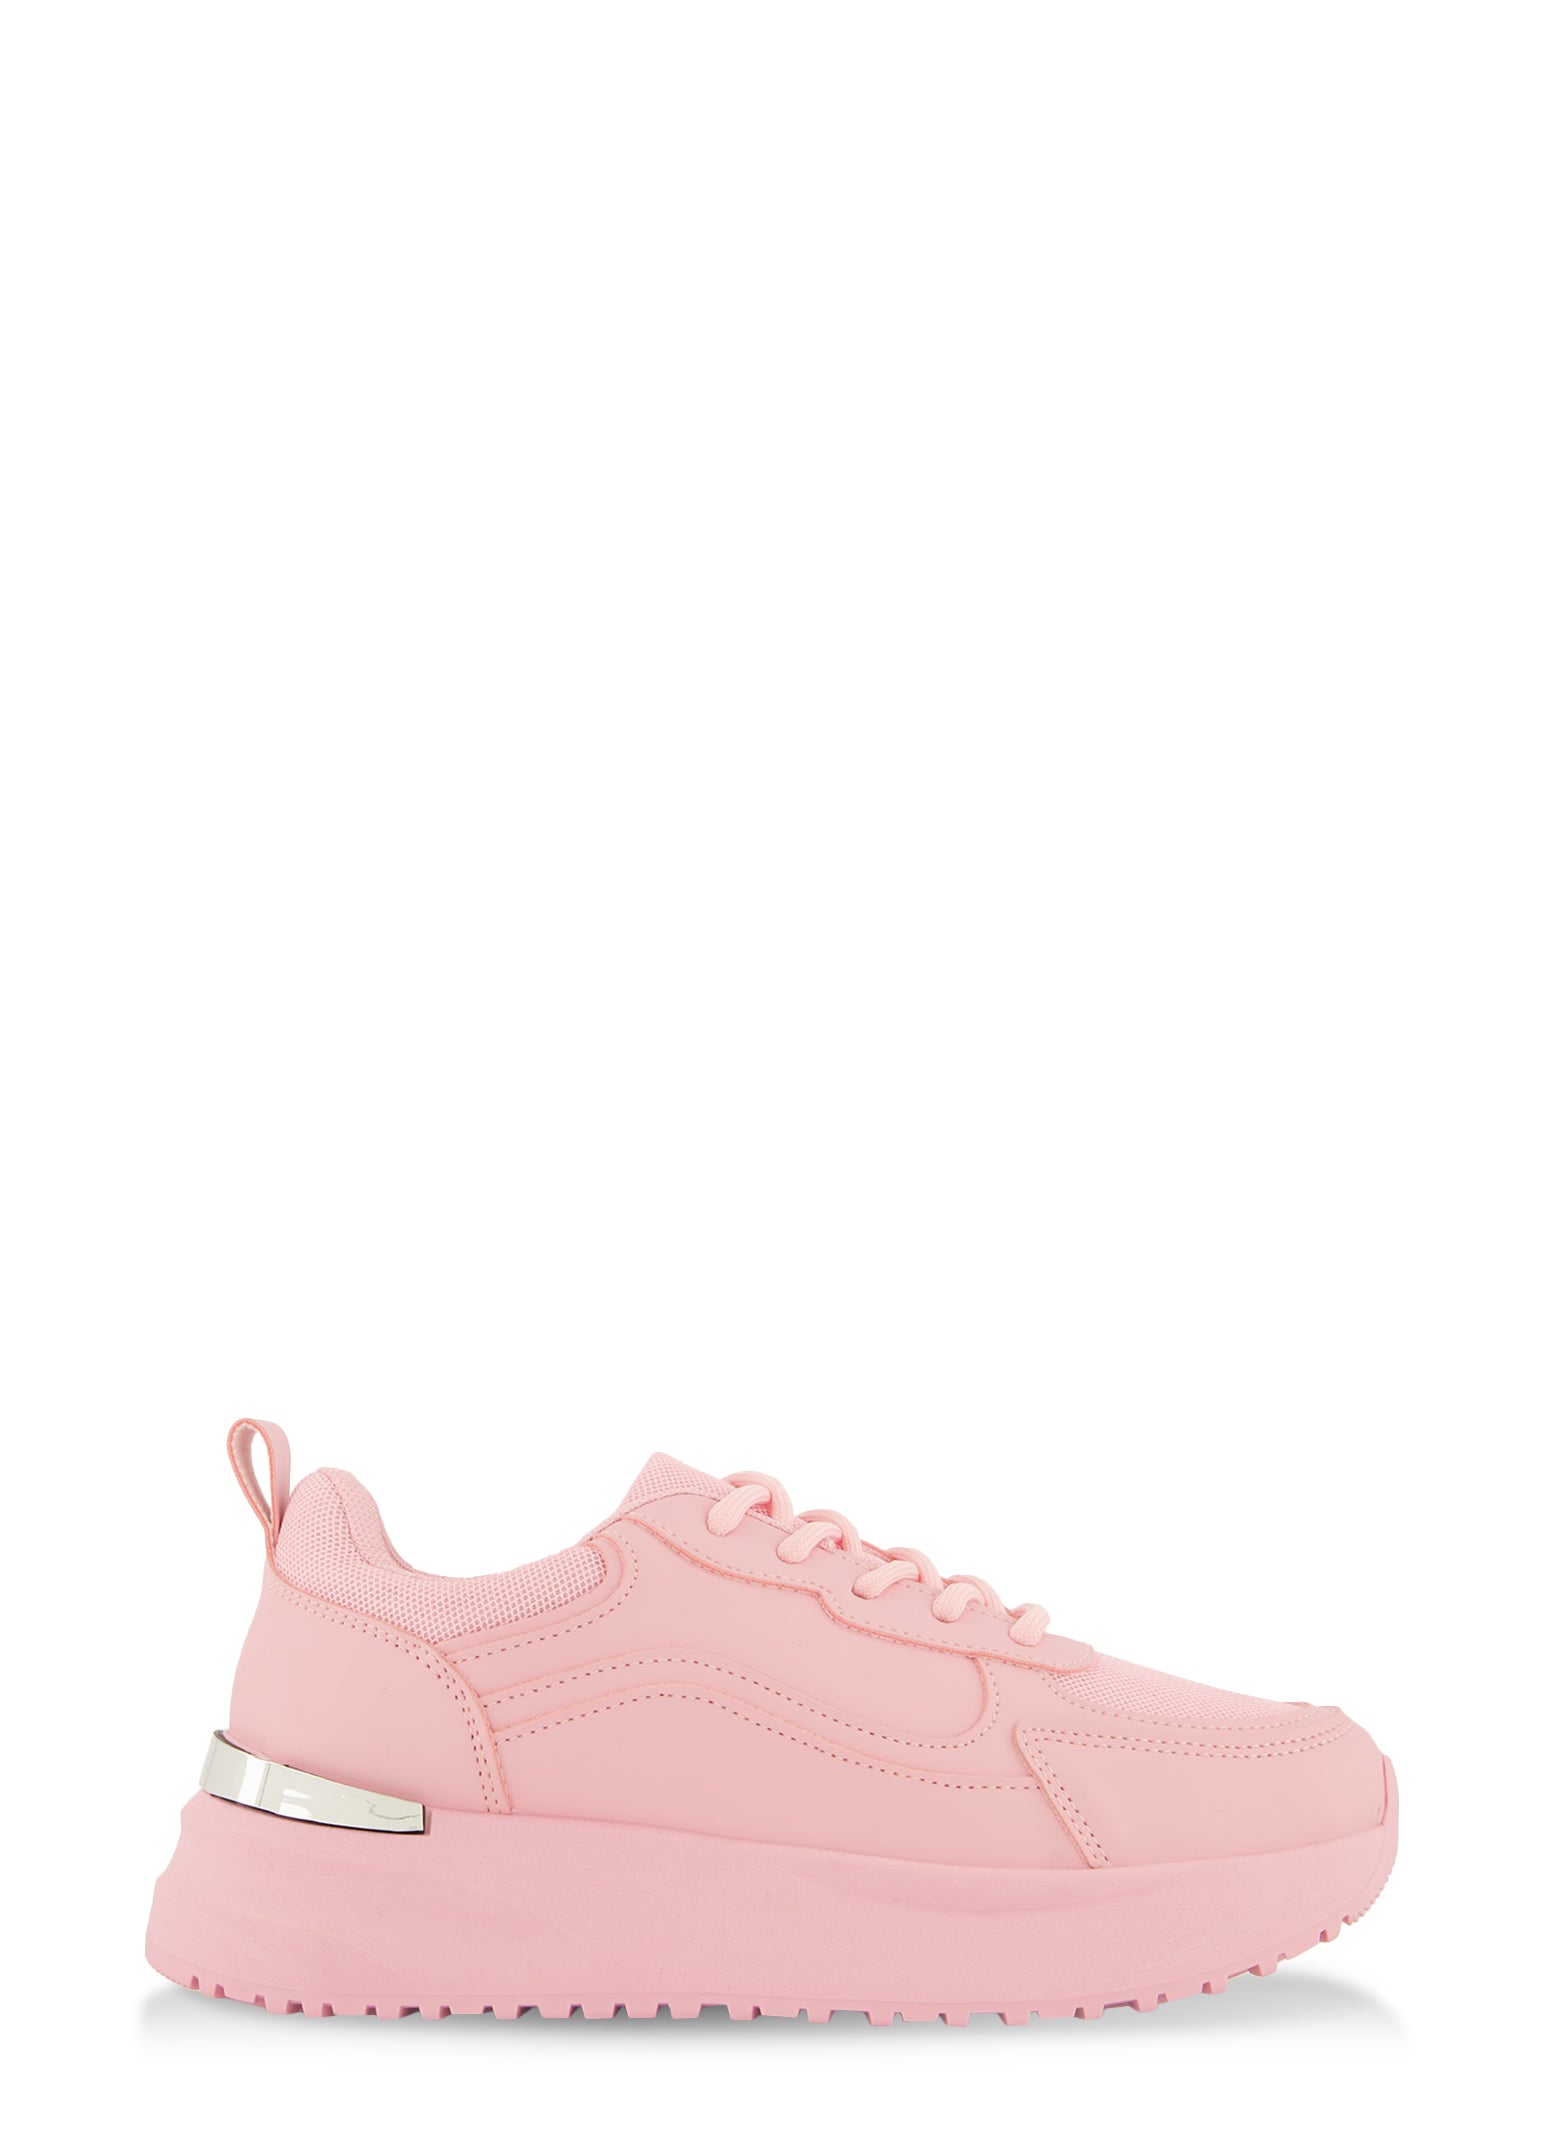 Cush Baby 2 Hot Pink Rhinestone Platform Sneakers | eBay